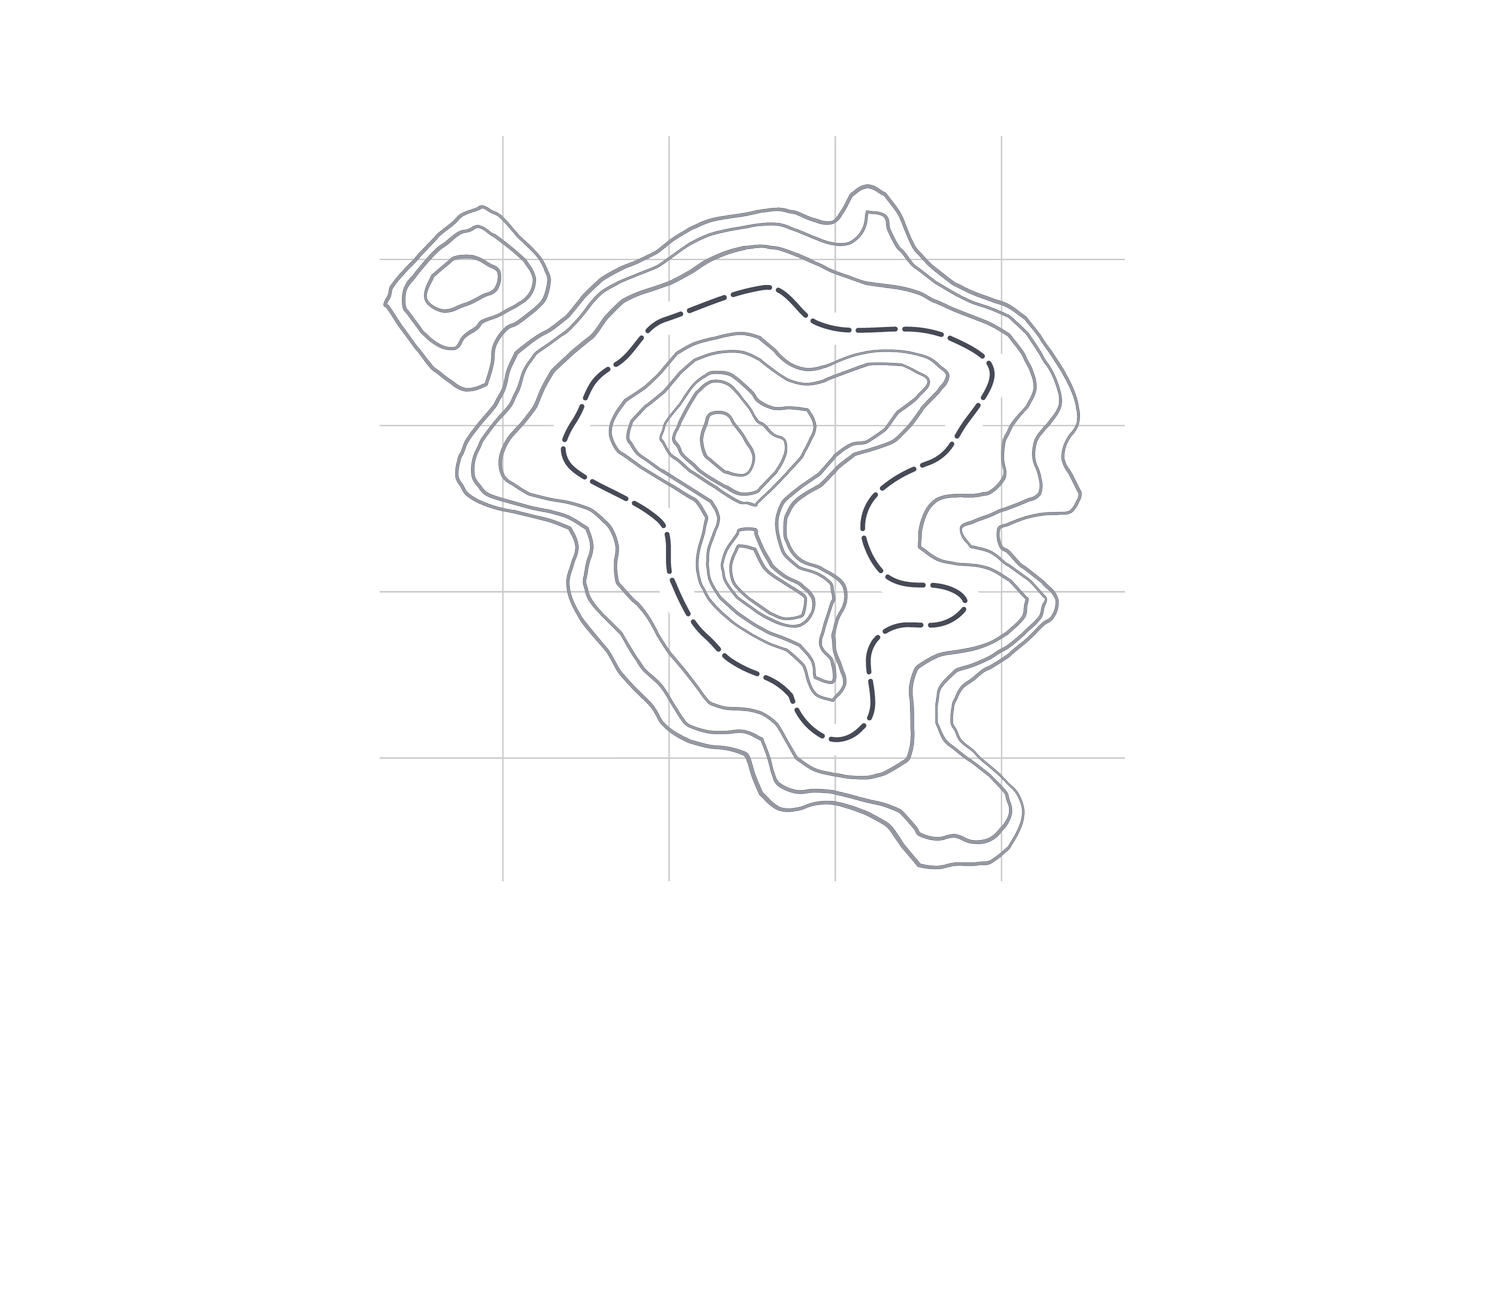 Vanguard Odyssey